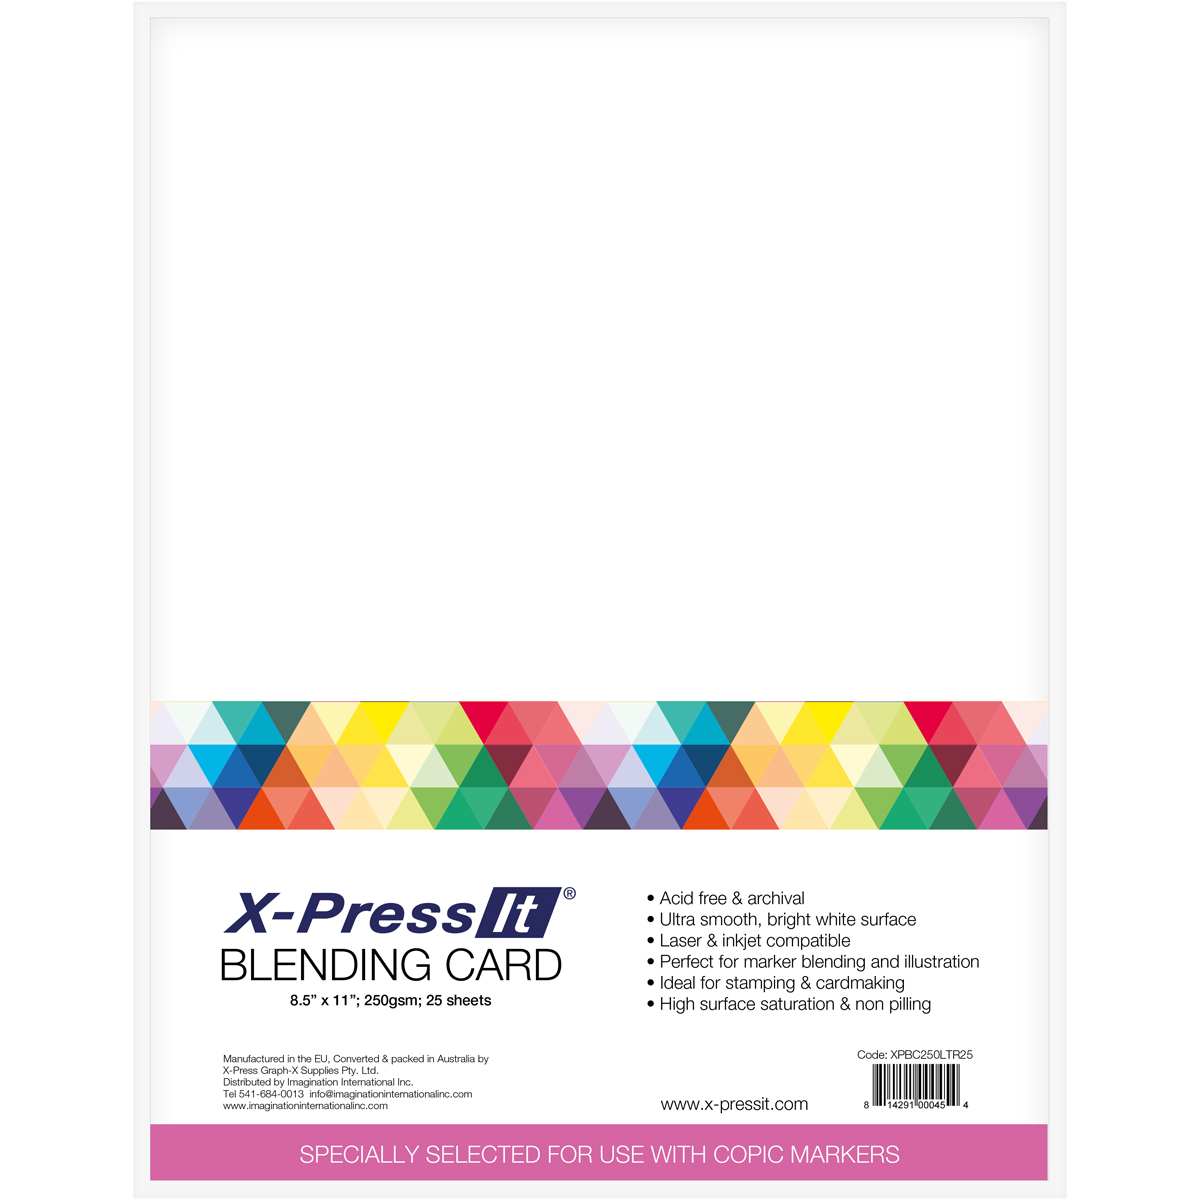 X-Press It Blending Card, 25 Sheets - image 1 of 3